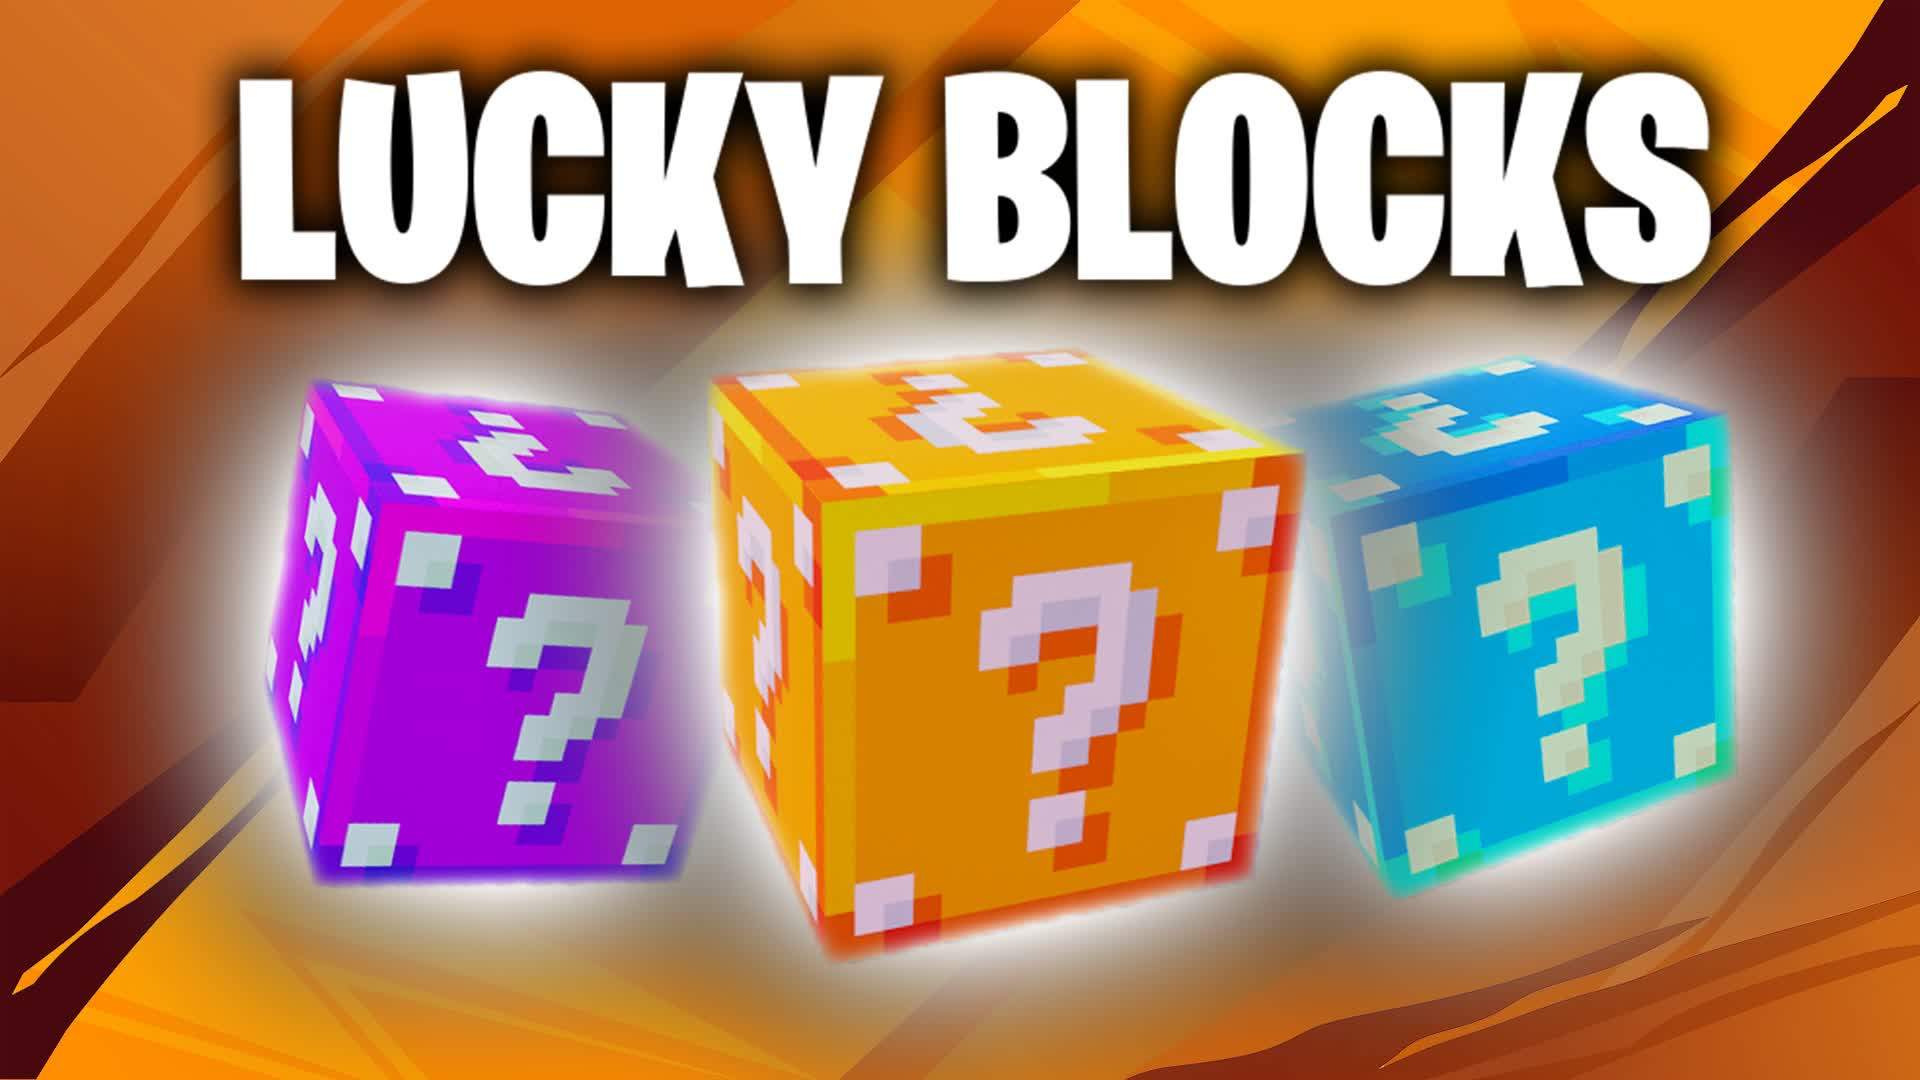 Lucky Block Battles [ Candook ] – Fortnite Creative Map Code